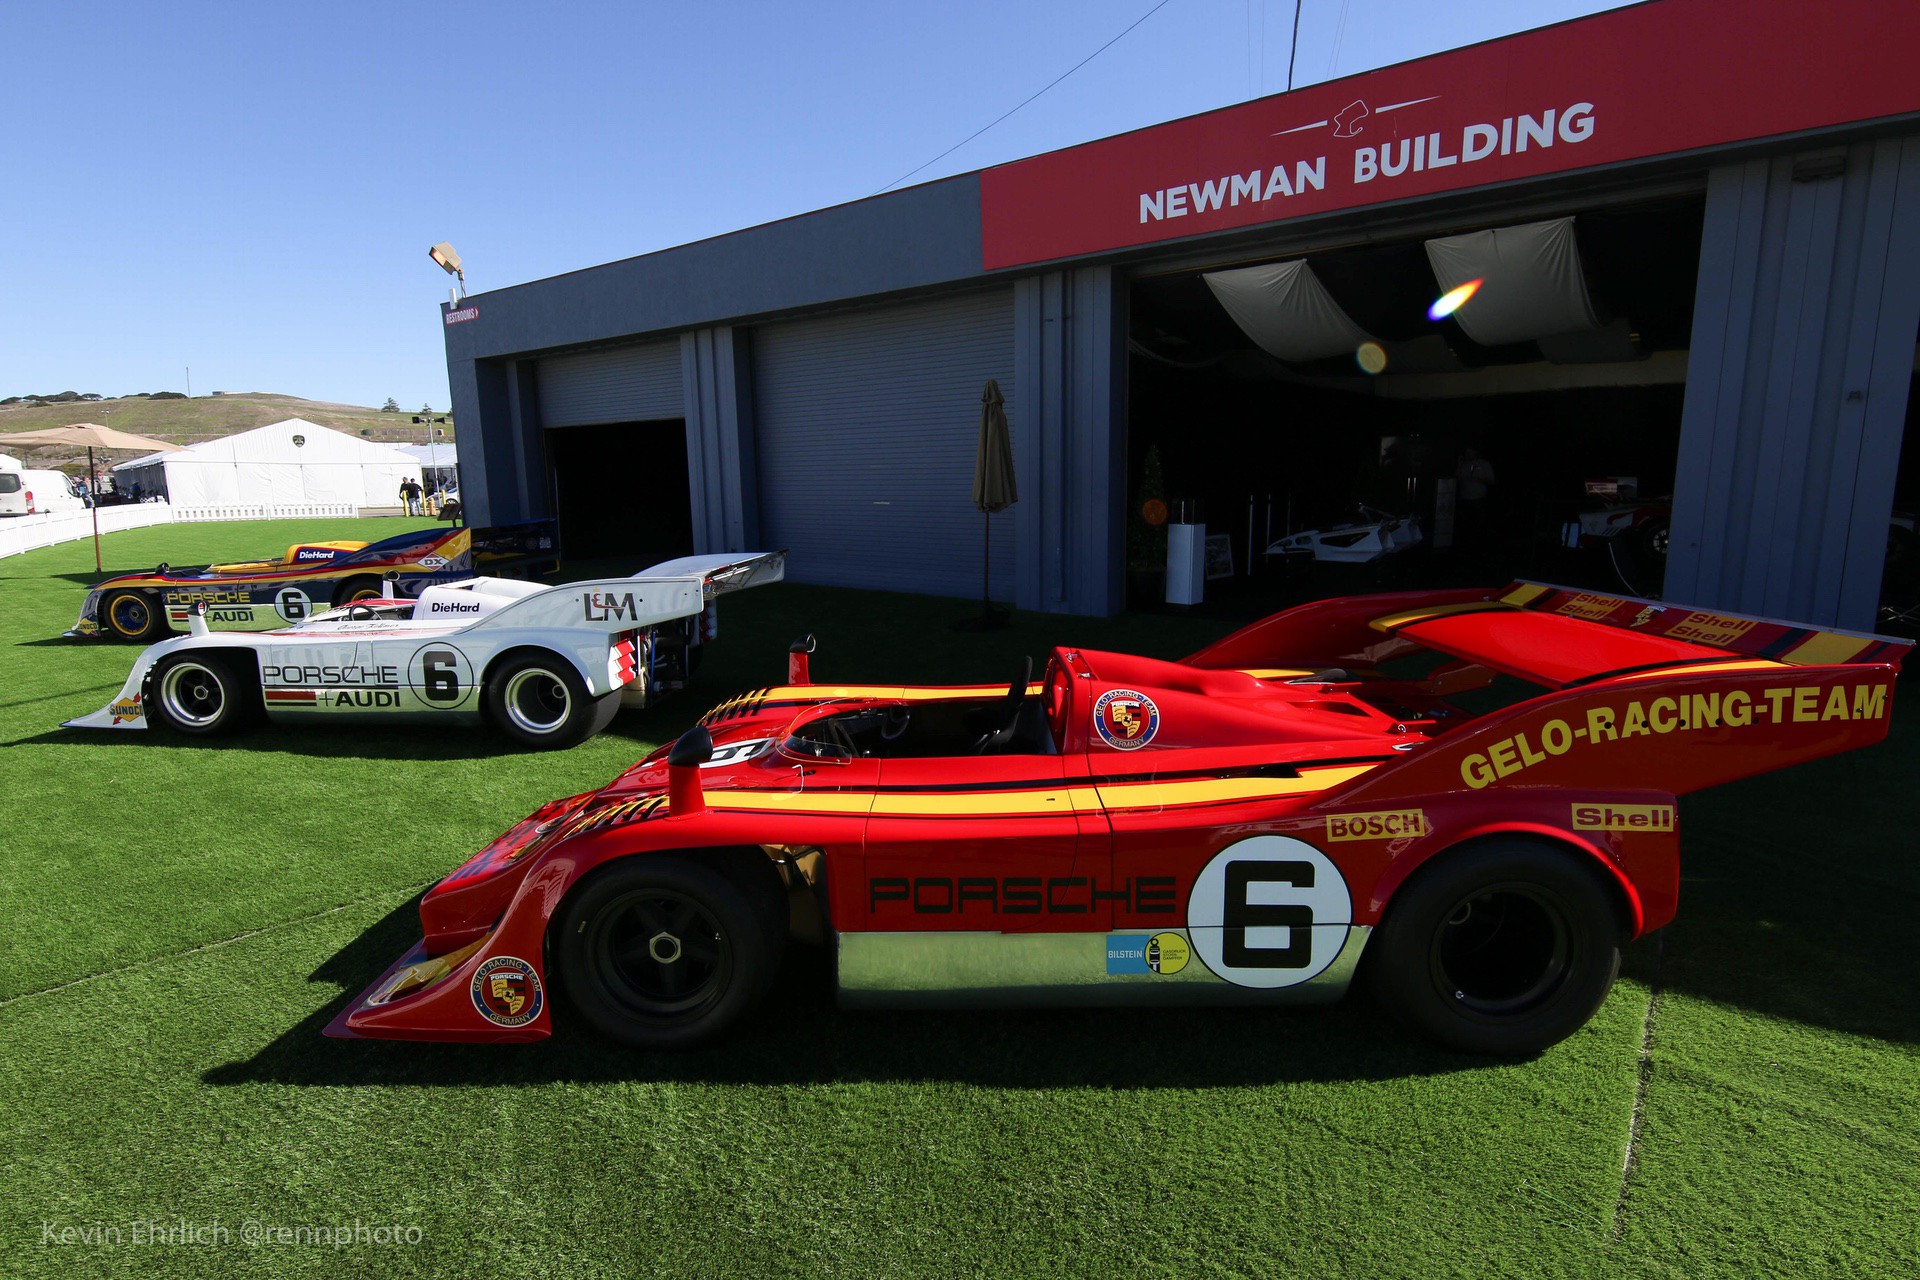 3 Porsche 917s on grass outside building at Velocity Invitational